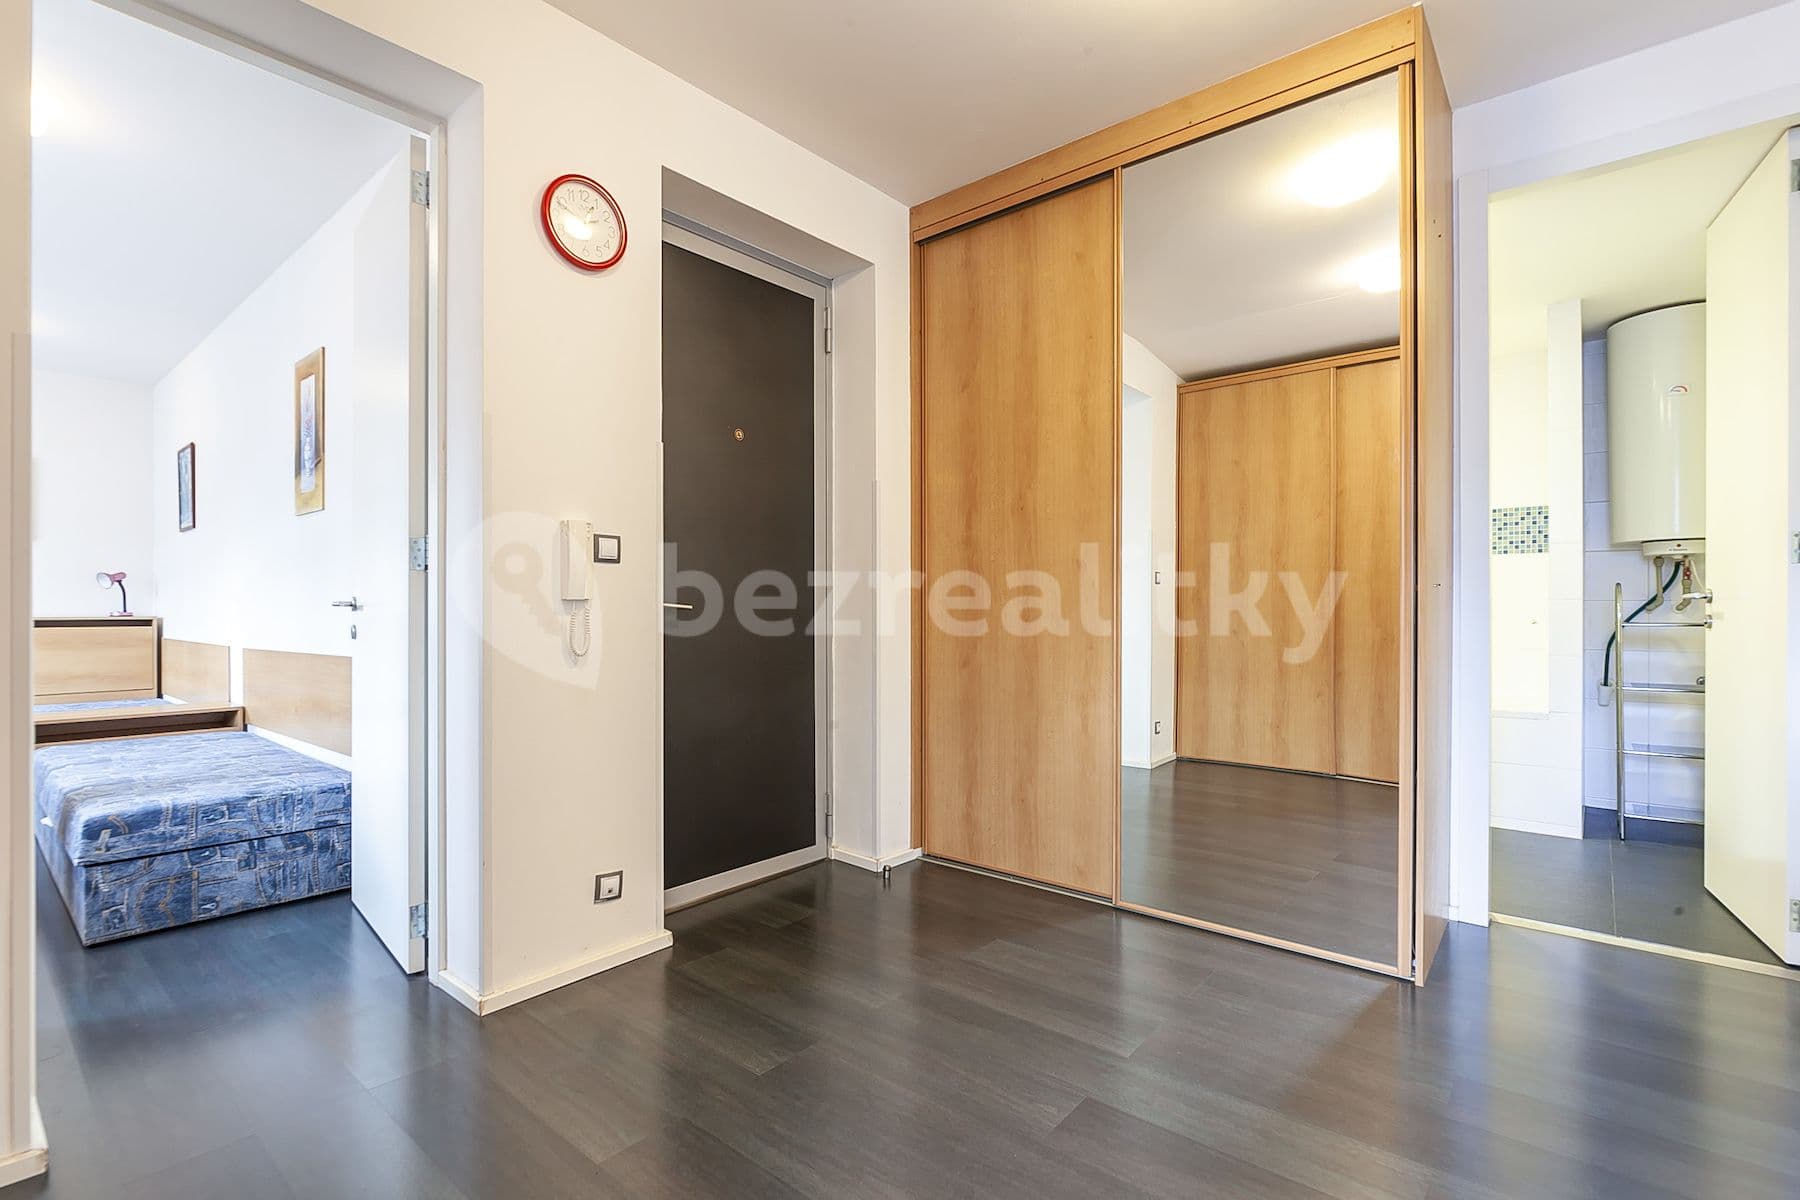 1 bedroom with open-plan kitchen flat for sale, 56 m², Rokytno, Rokytnice nad Jizerou, Liberecký Region